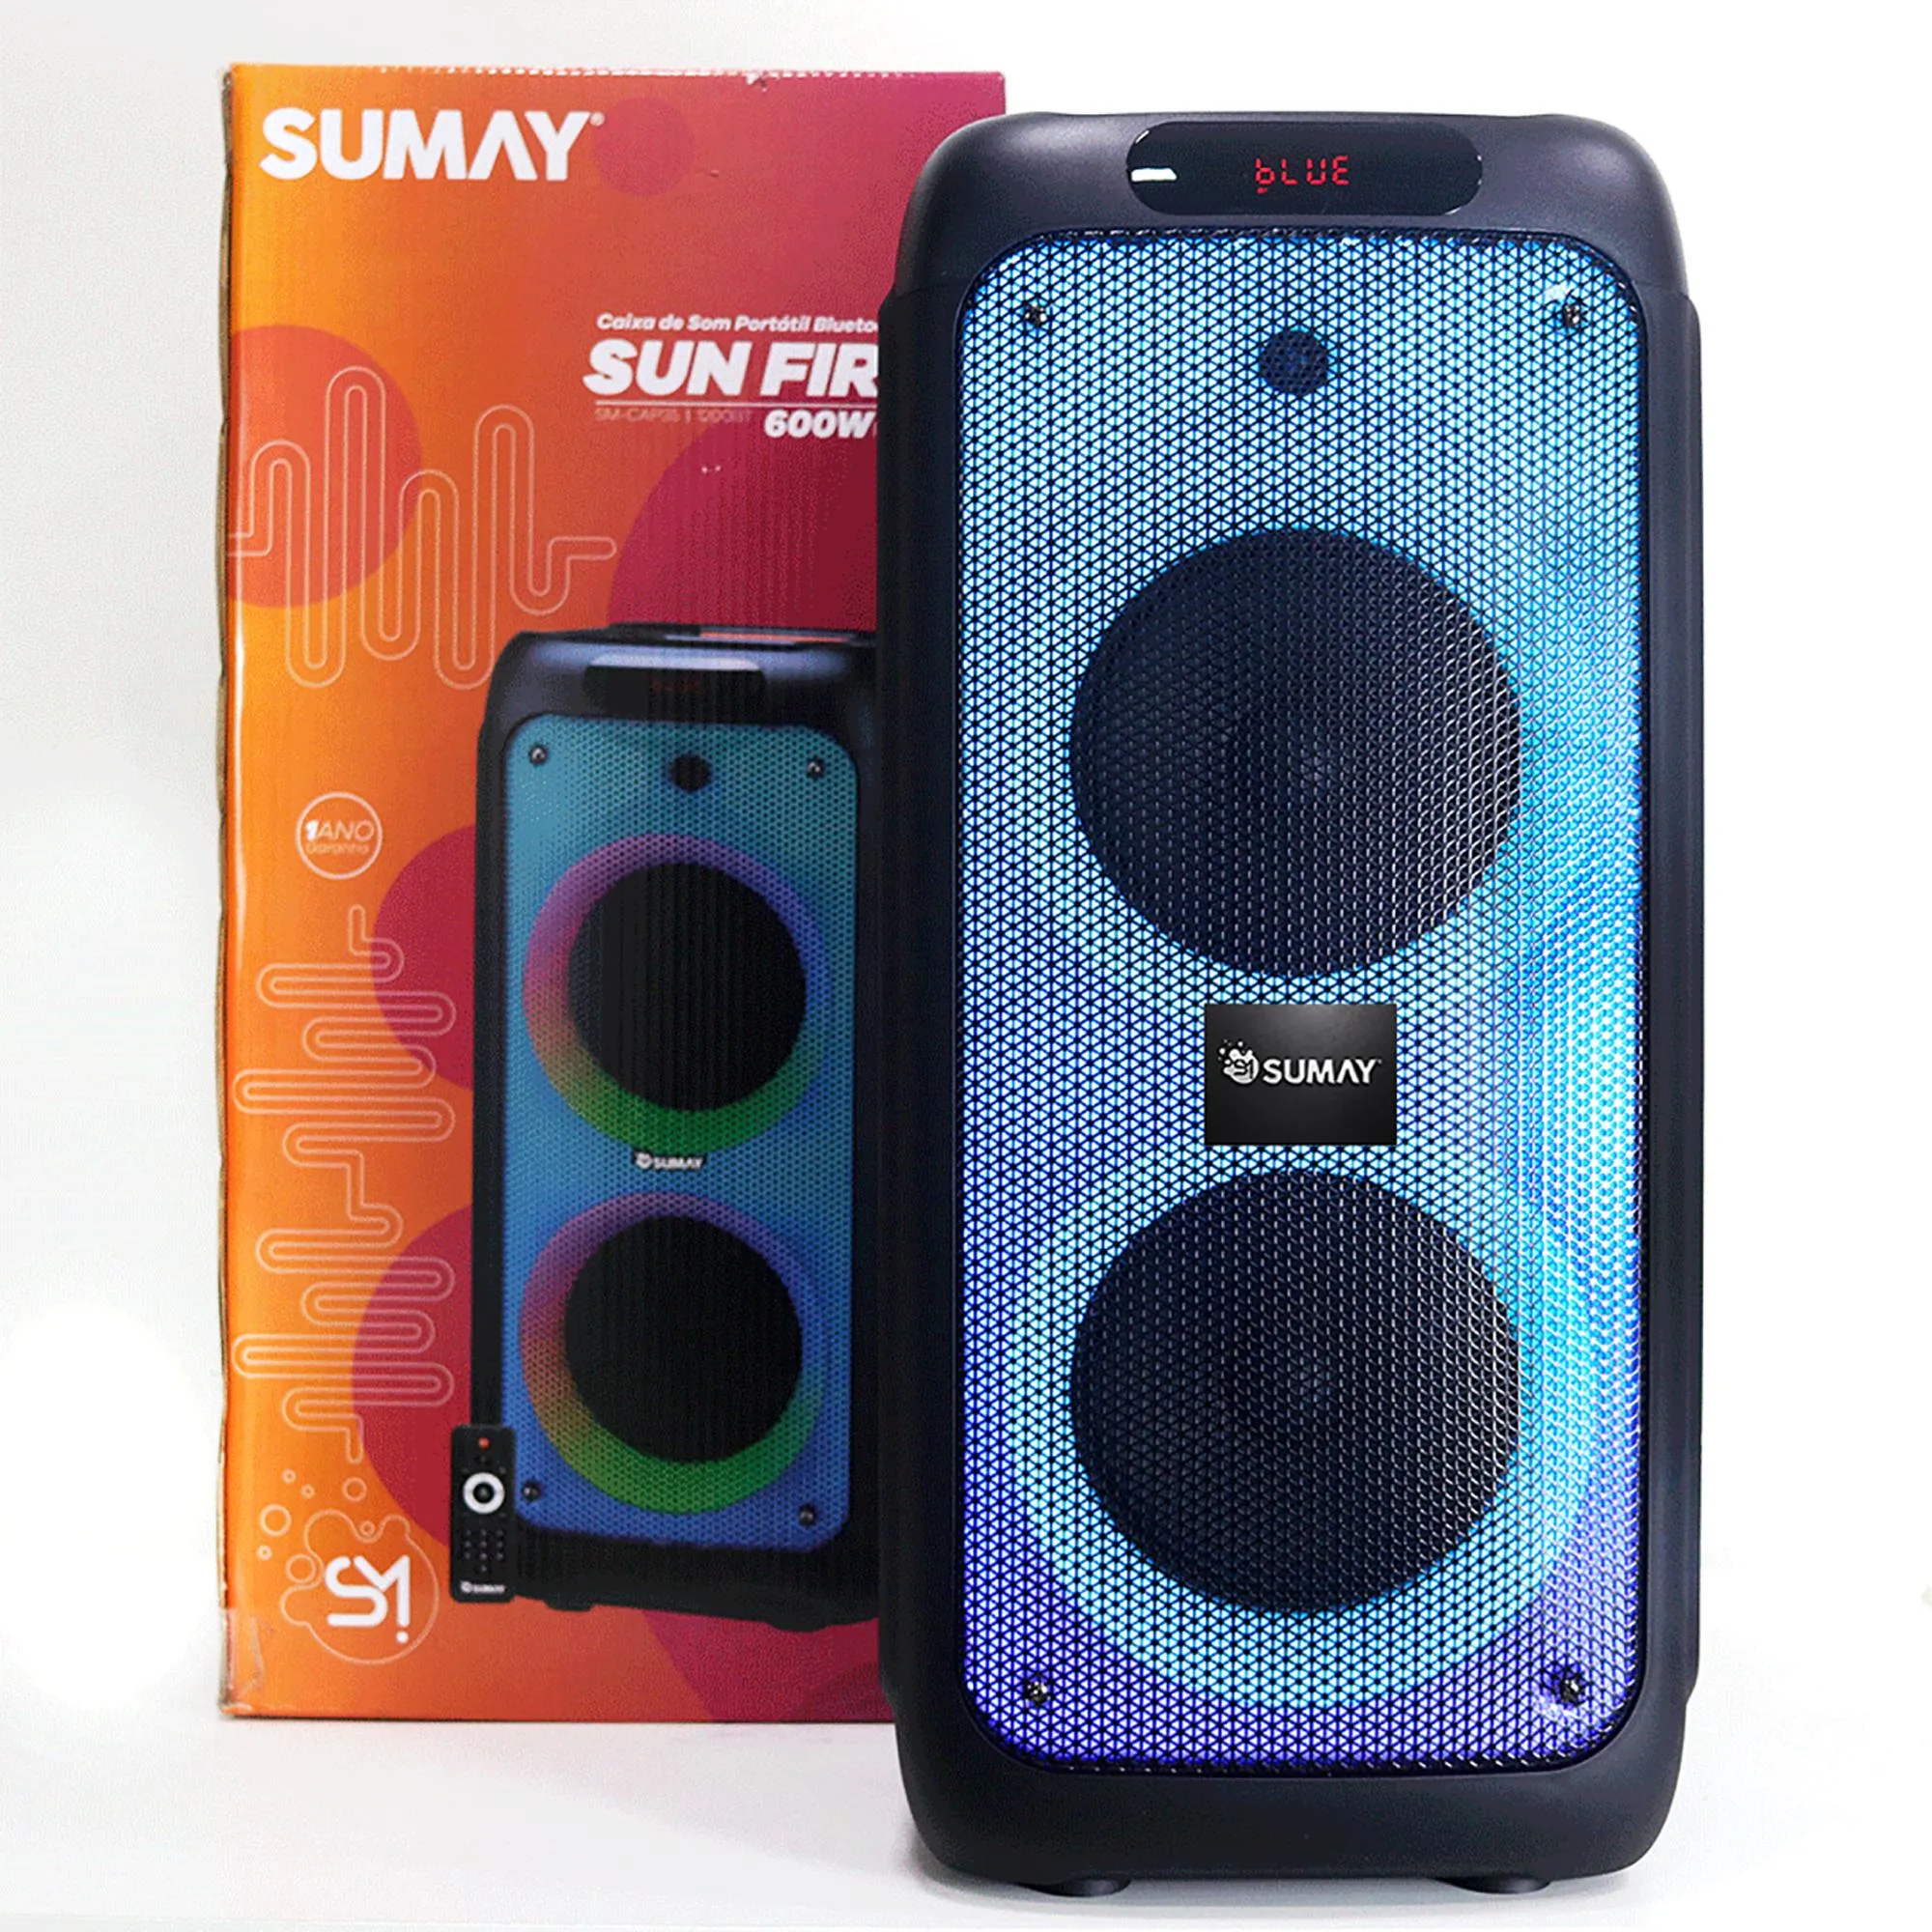 Caixa de Som Portátil Sumay Sunfire CAP35 600w Preta (81218)